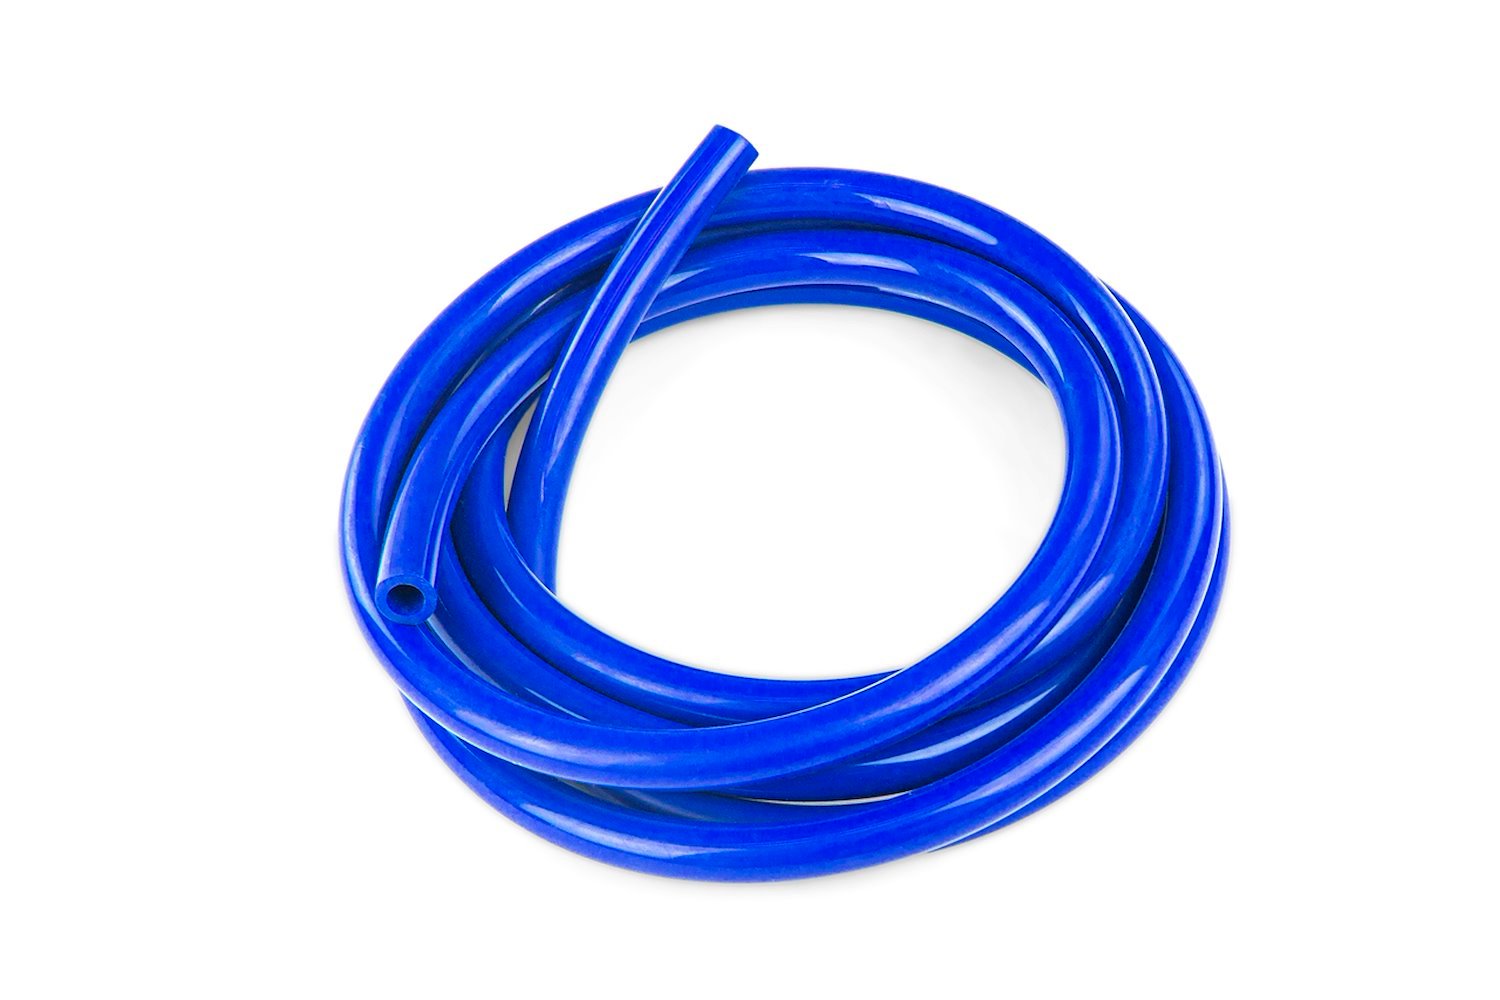 HTSVH4-BLUEx10 High-Temperature Silicone Vacuum Hose Tubing, 5/32 in. ID, 10 ft. Roll, Blue